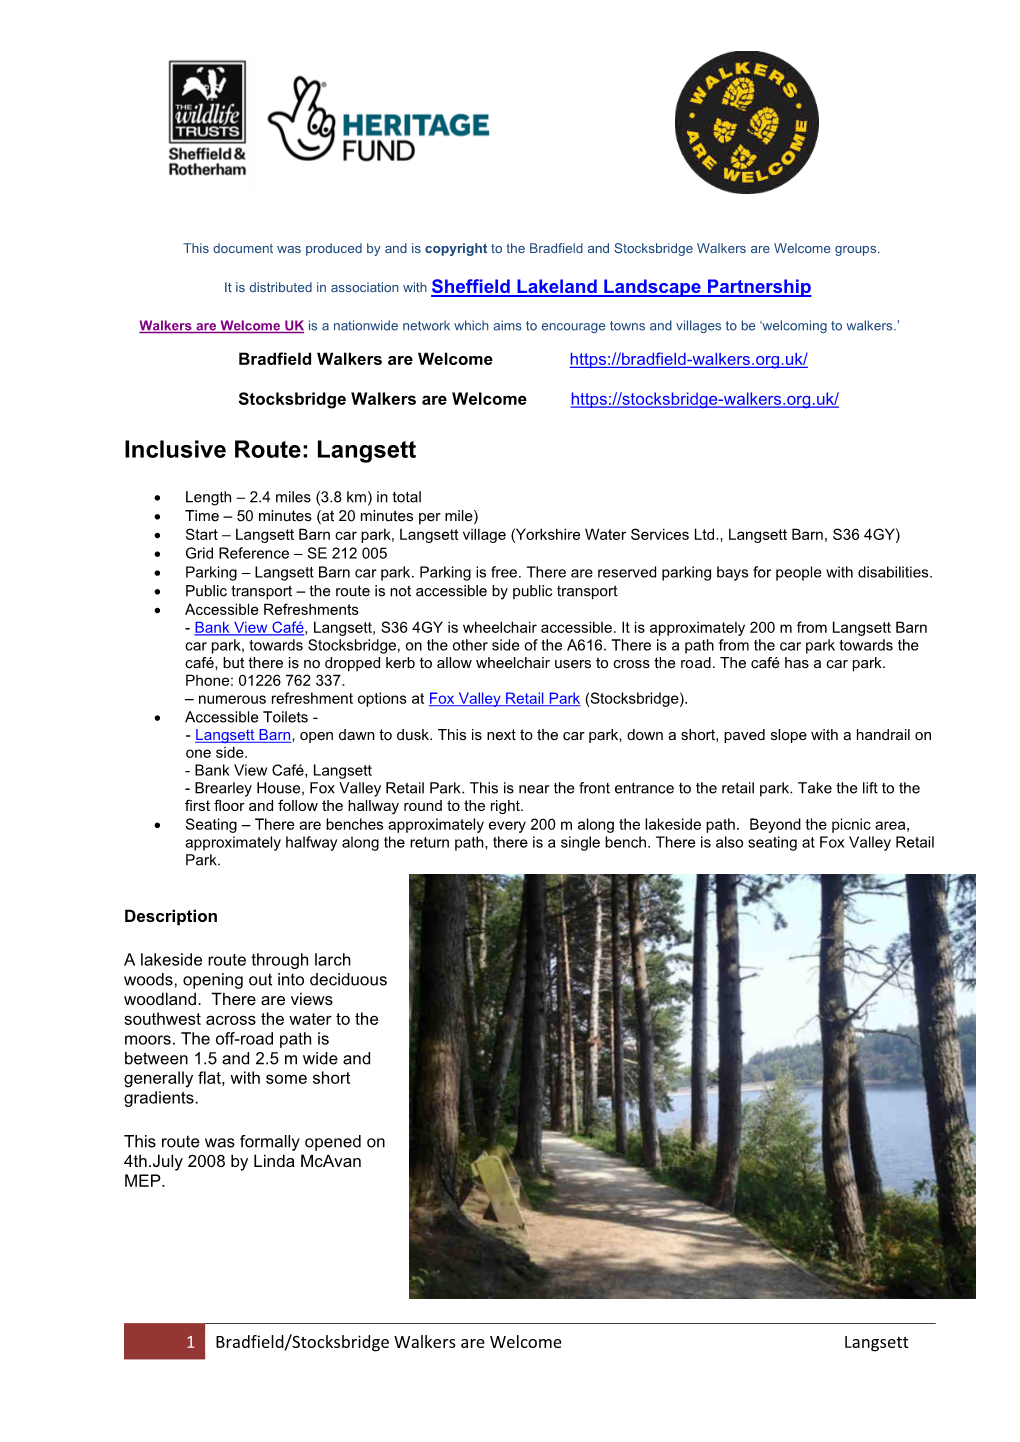 Langsett Inclusive Route